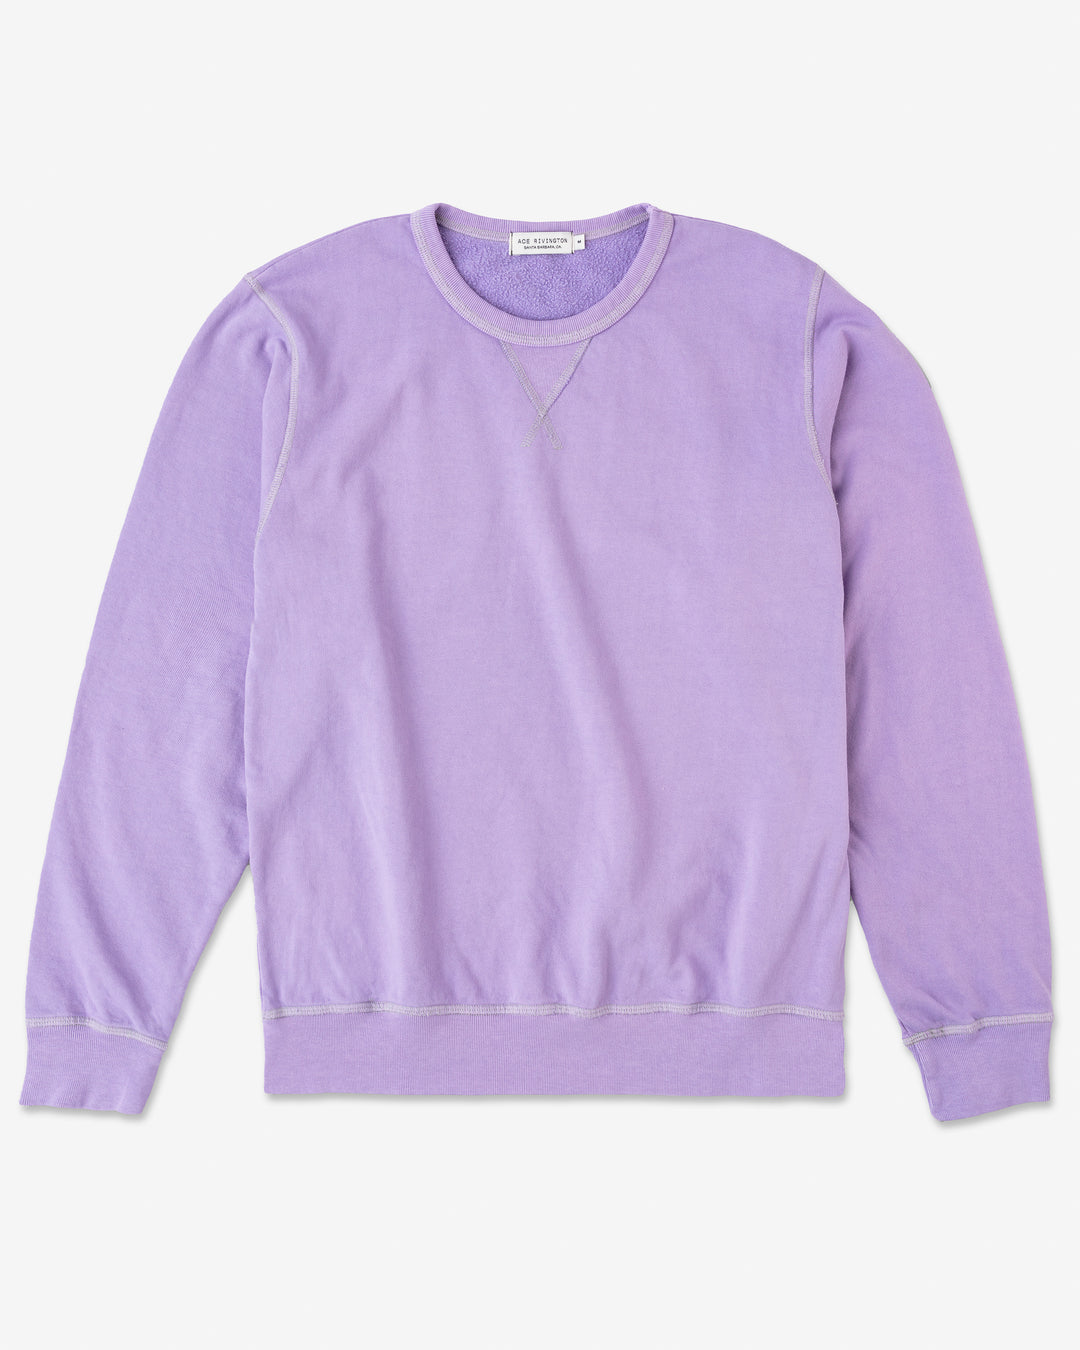 Diesel Sweatshirt Women's S Purple Crew Neck Logo 100% Cotton Made In Greece